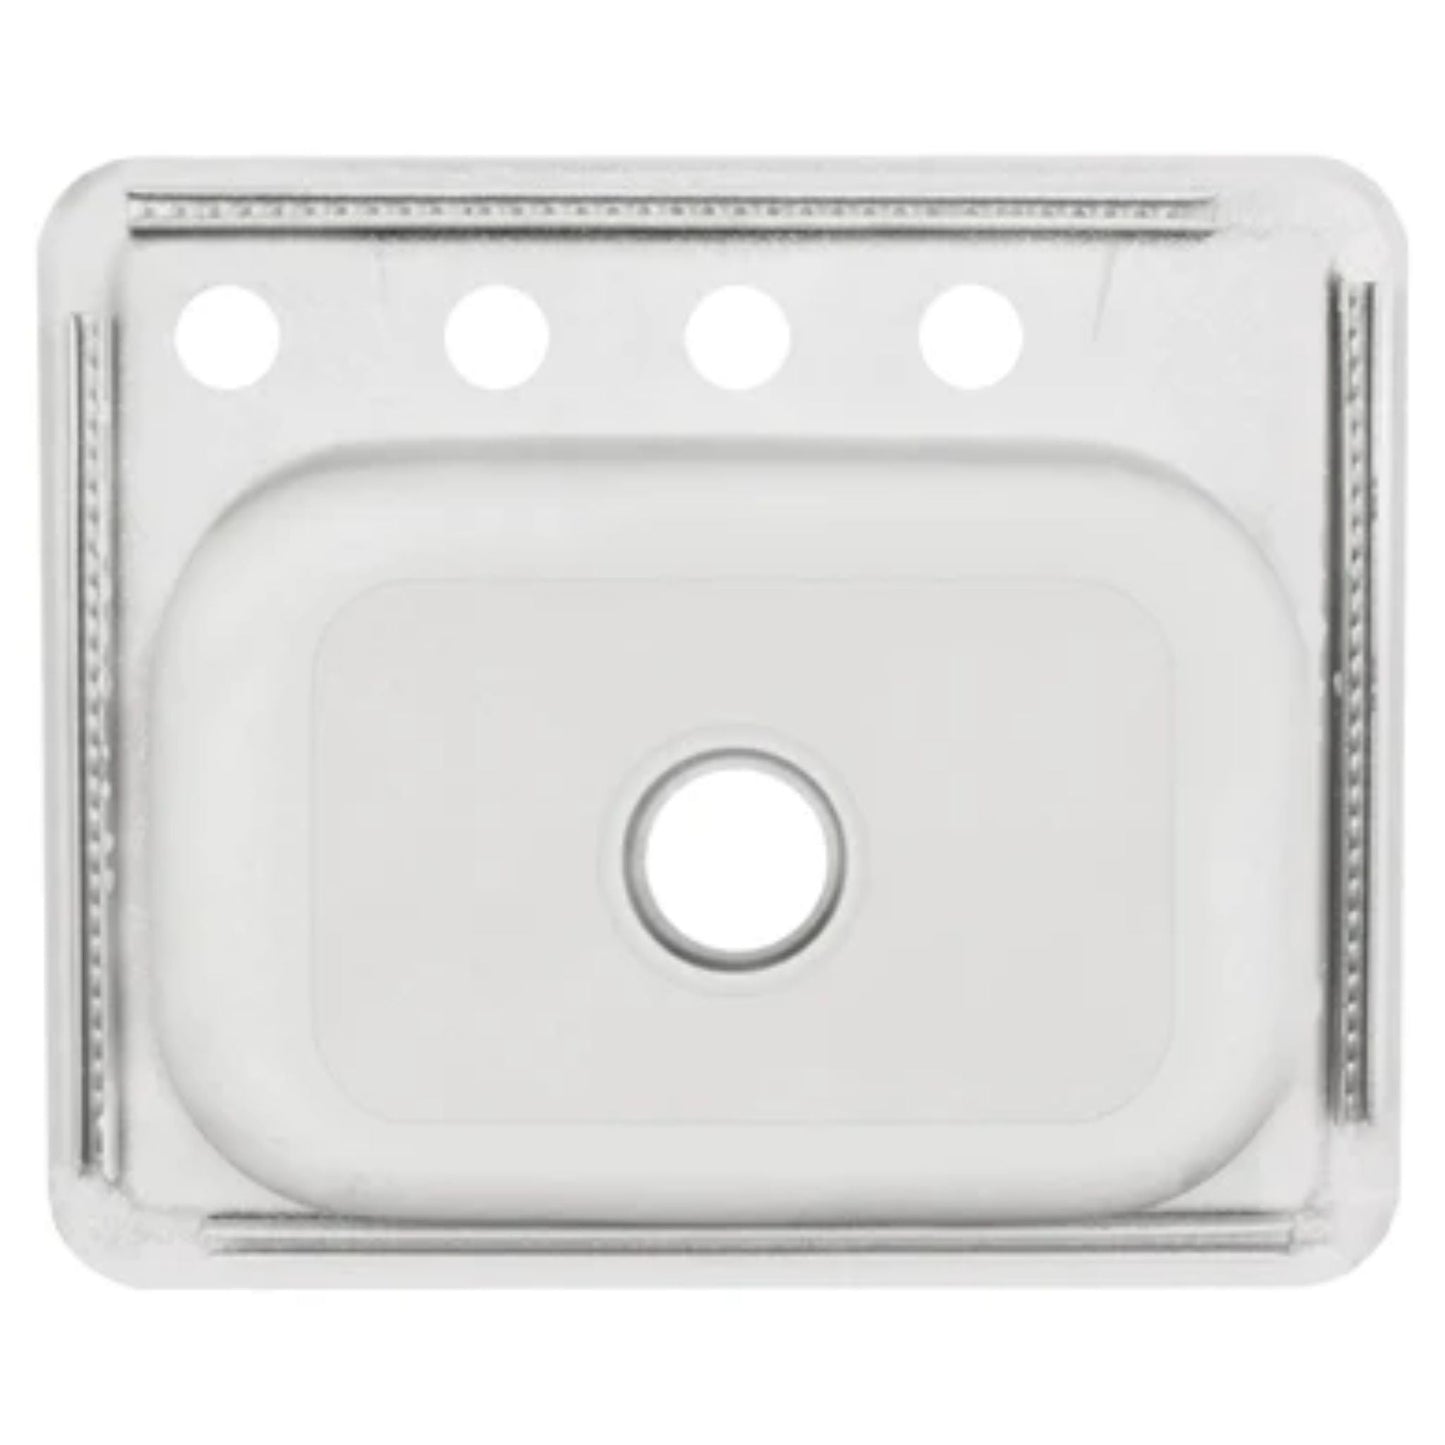 LessCare Top Mount Stainless Steel Single Basin Kitchen Sink - LT84